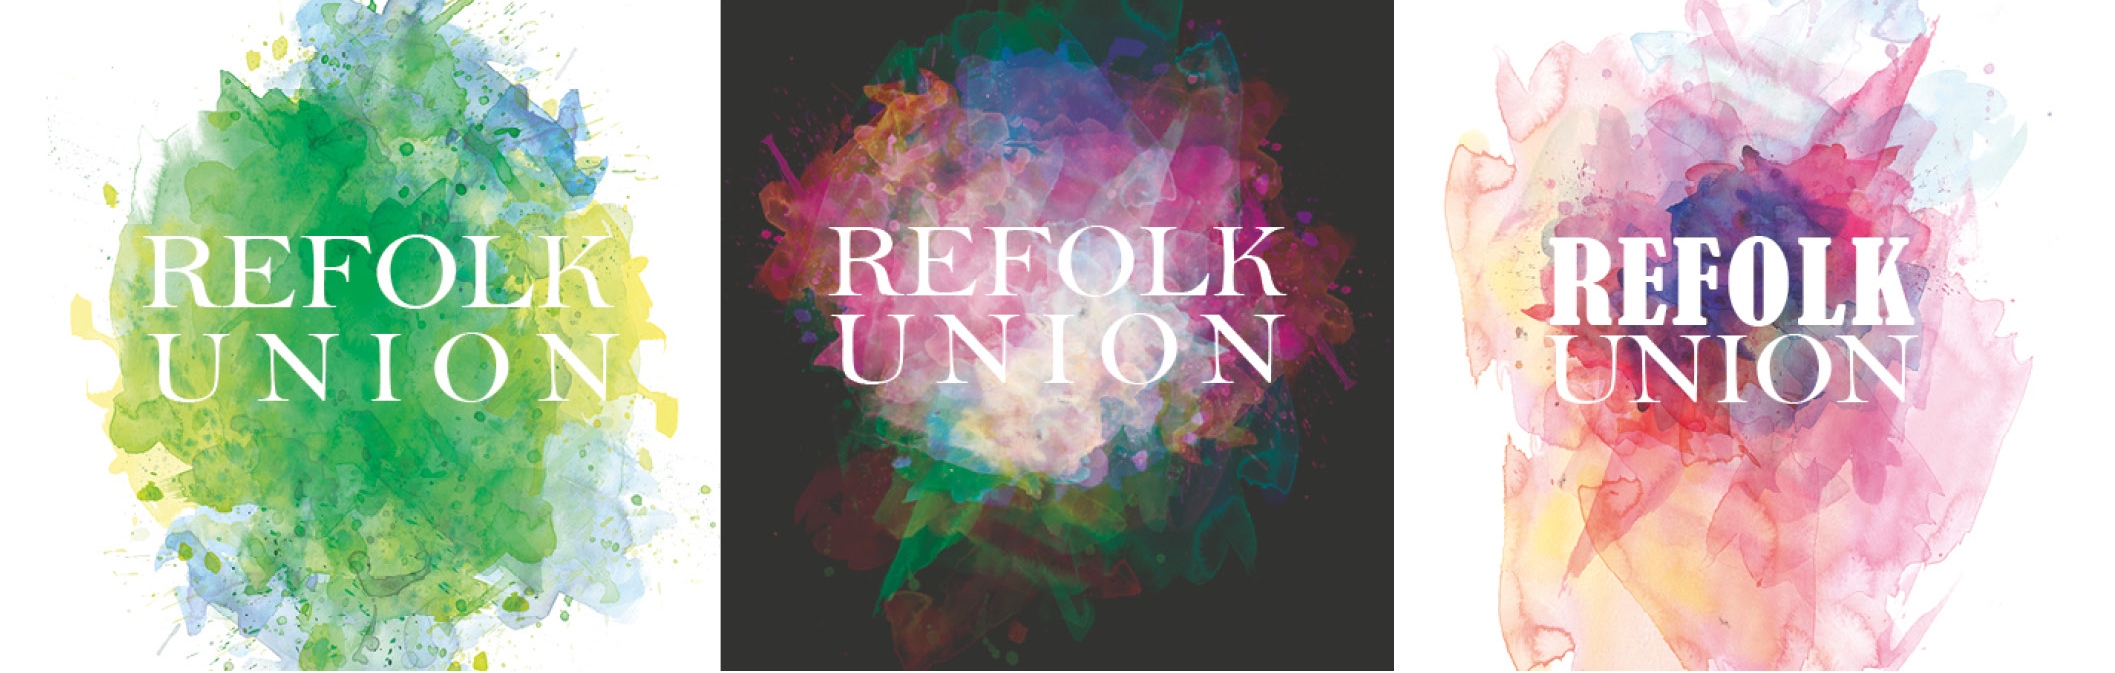 Refolk Union